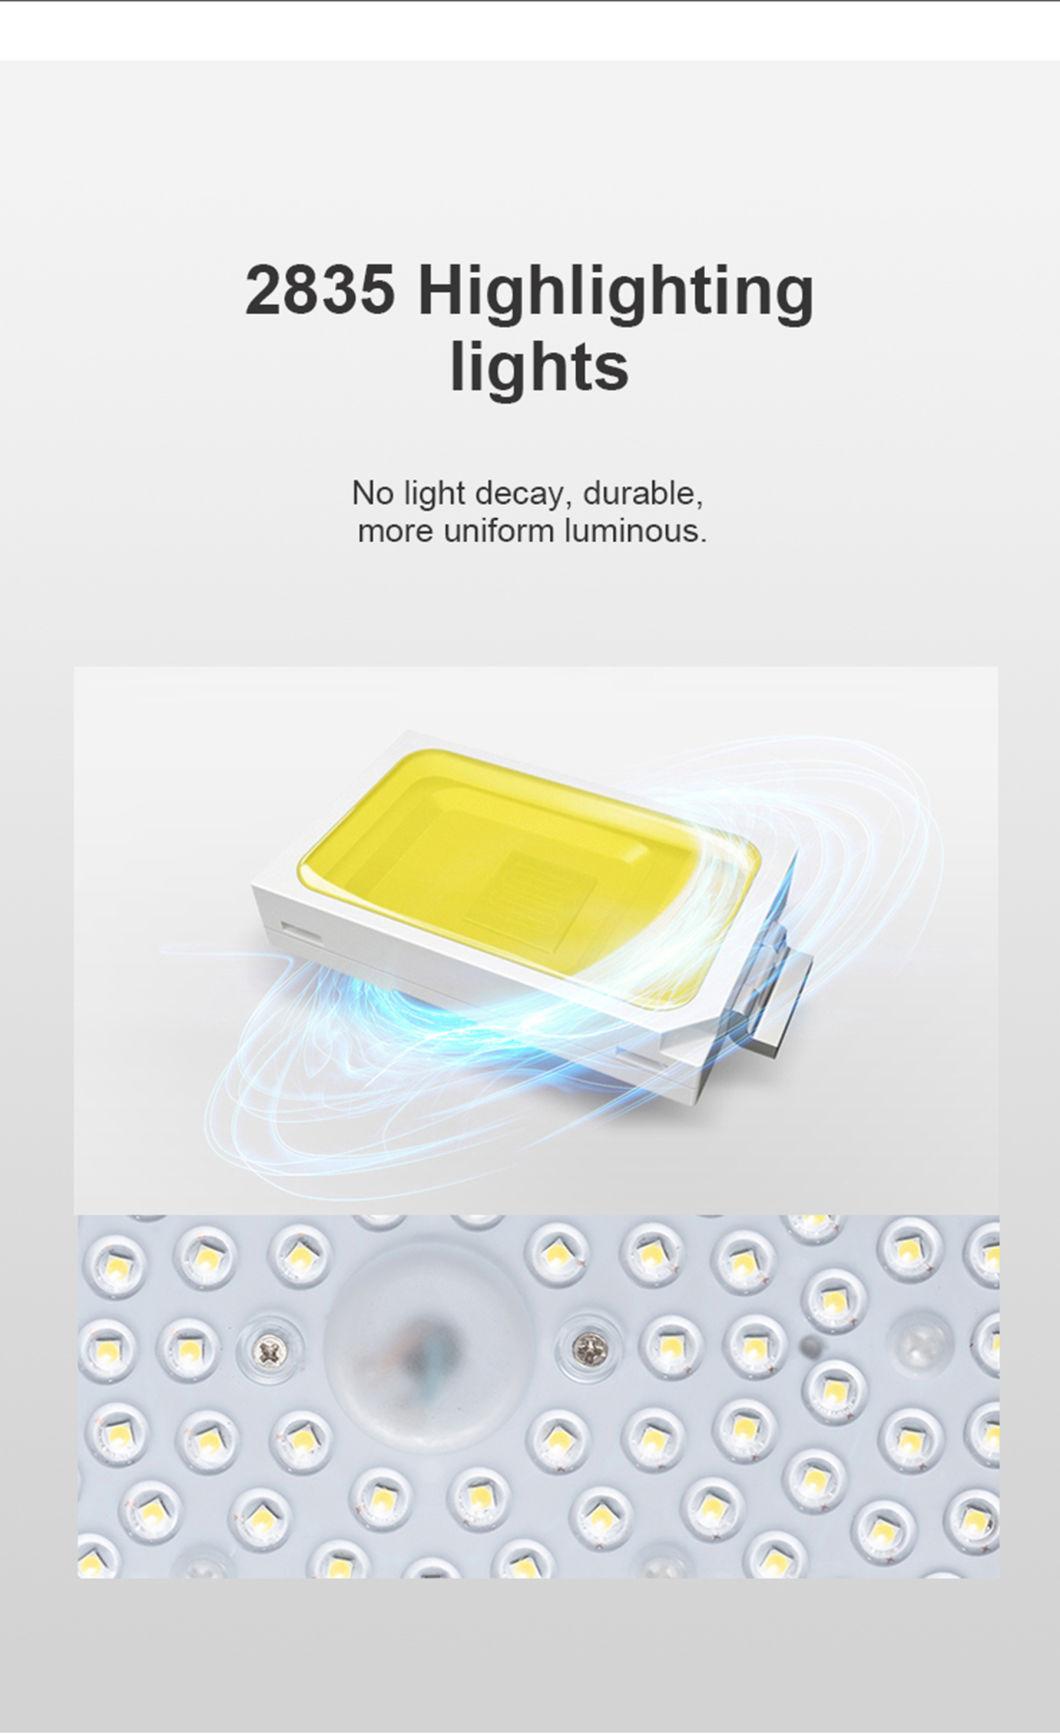 Industrial Workshop Excellent New Design Products LED High Bay Light